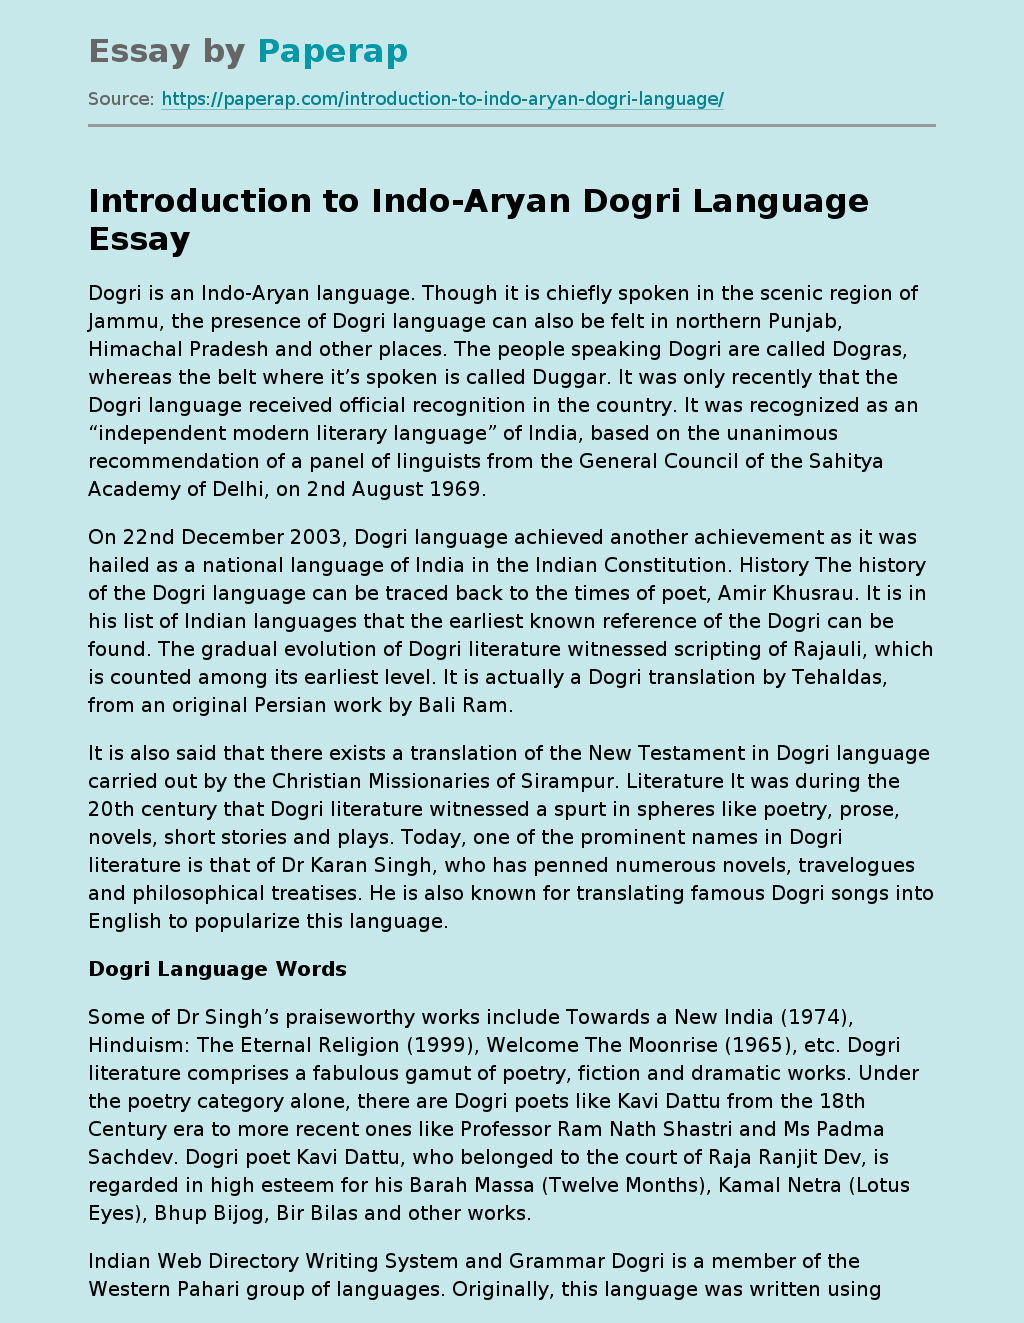 Introduction to Indo-Aryan Dogri Language